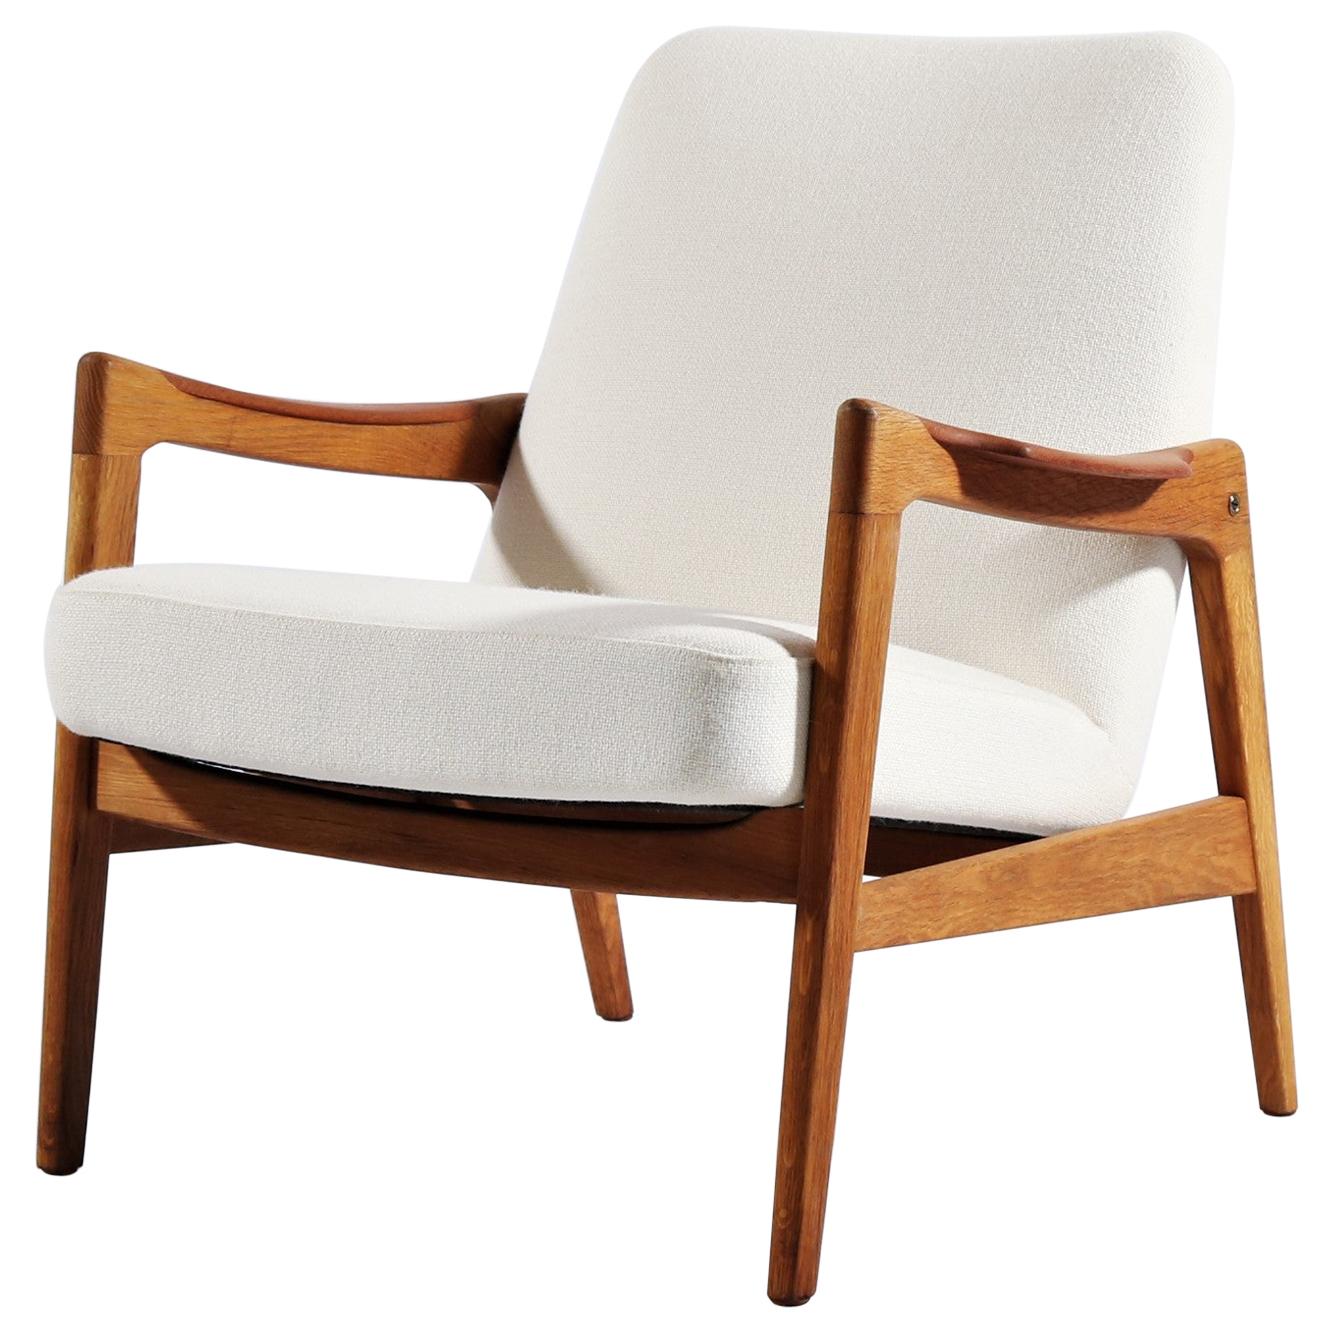 1950s Danish Modern Cabinetmakers Easy Chair in Teak, Oak and White Kvadrat Wool